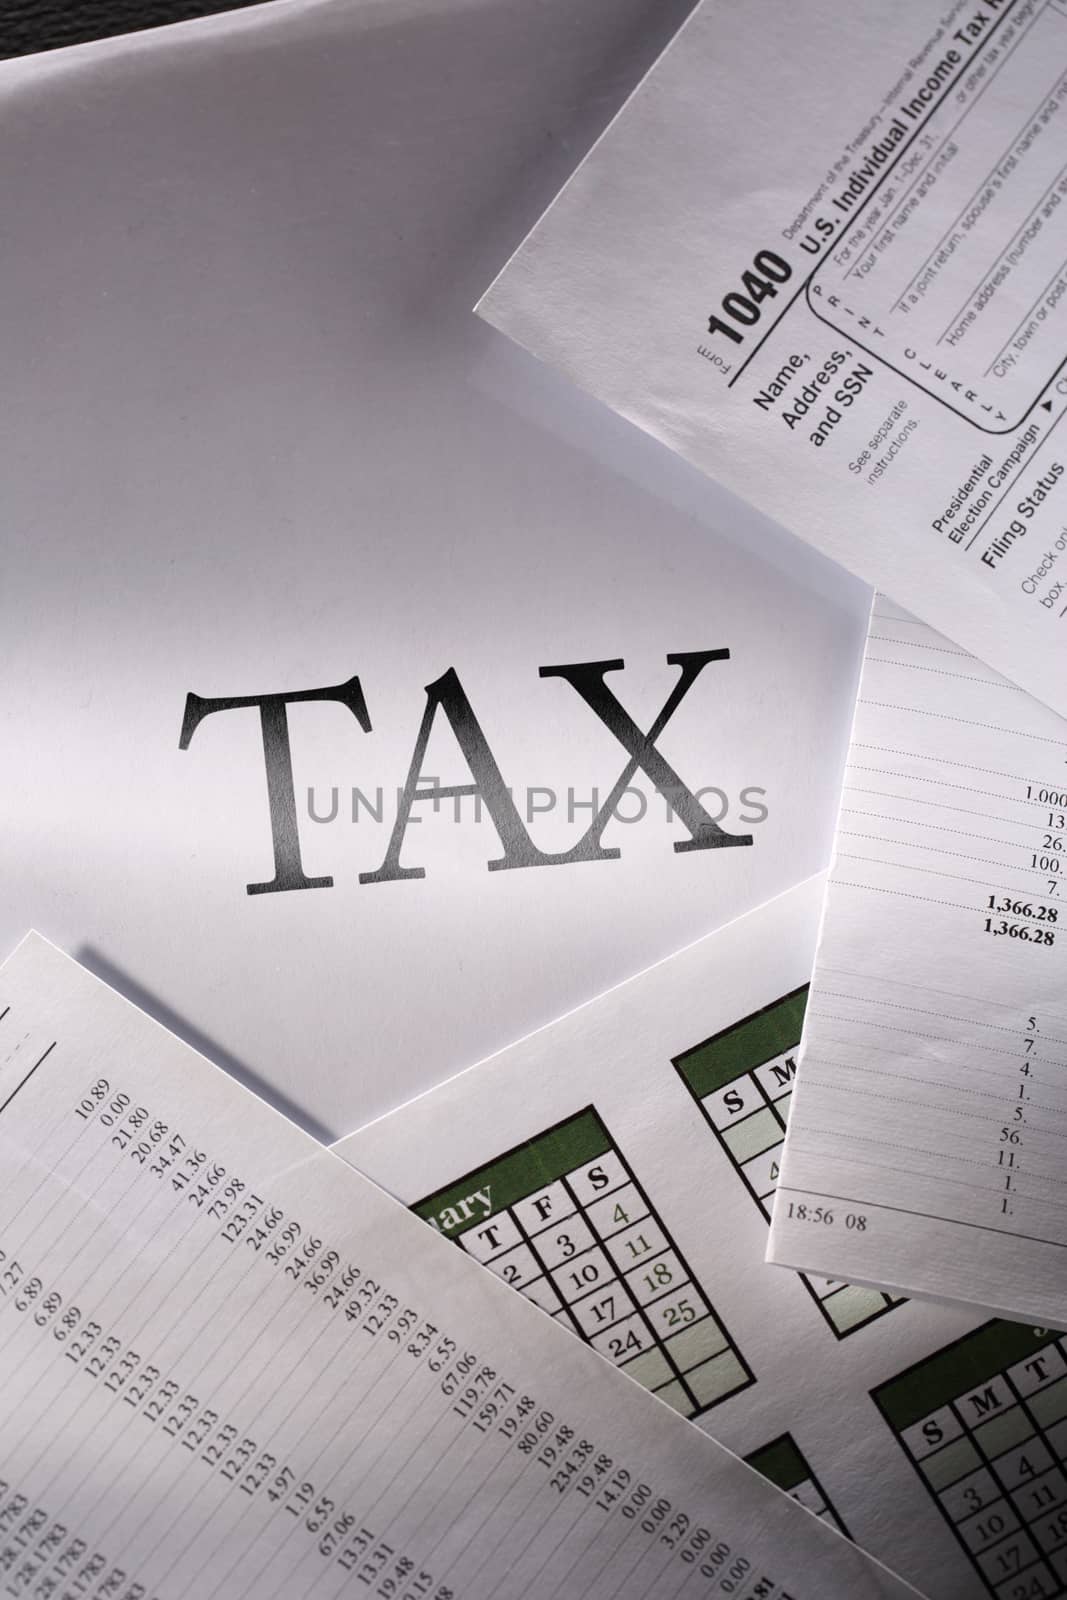 Operating budget, calendar and tax